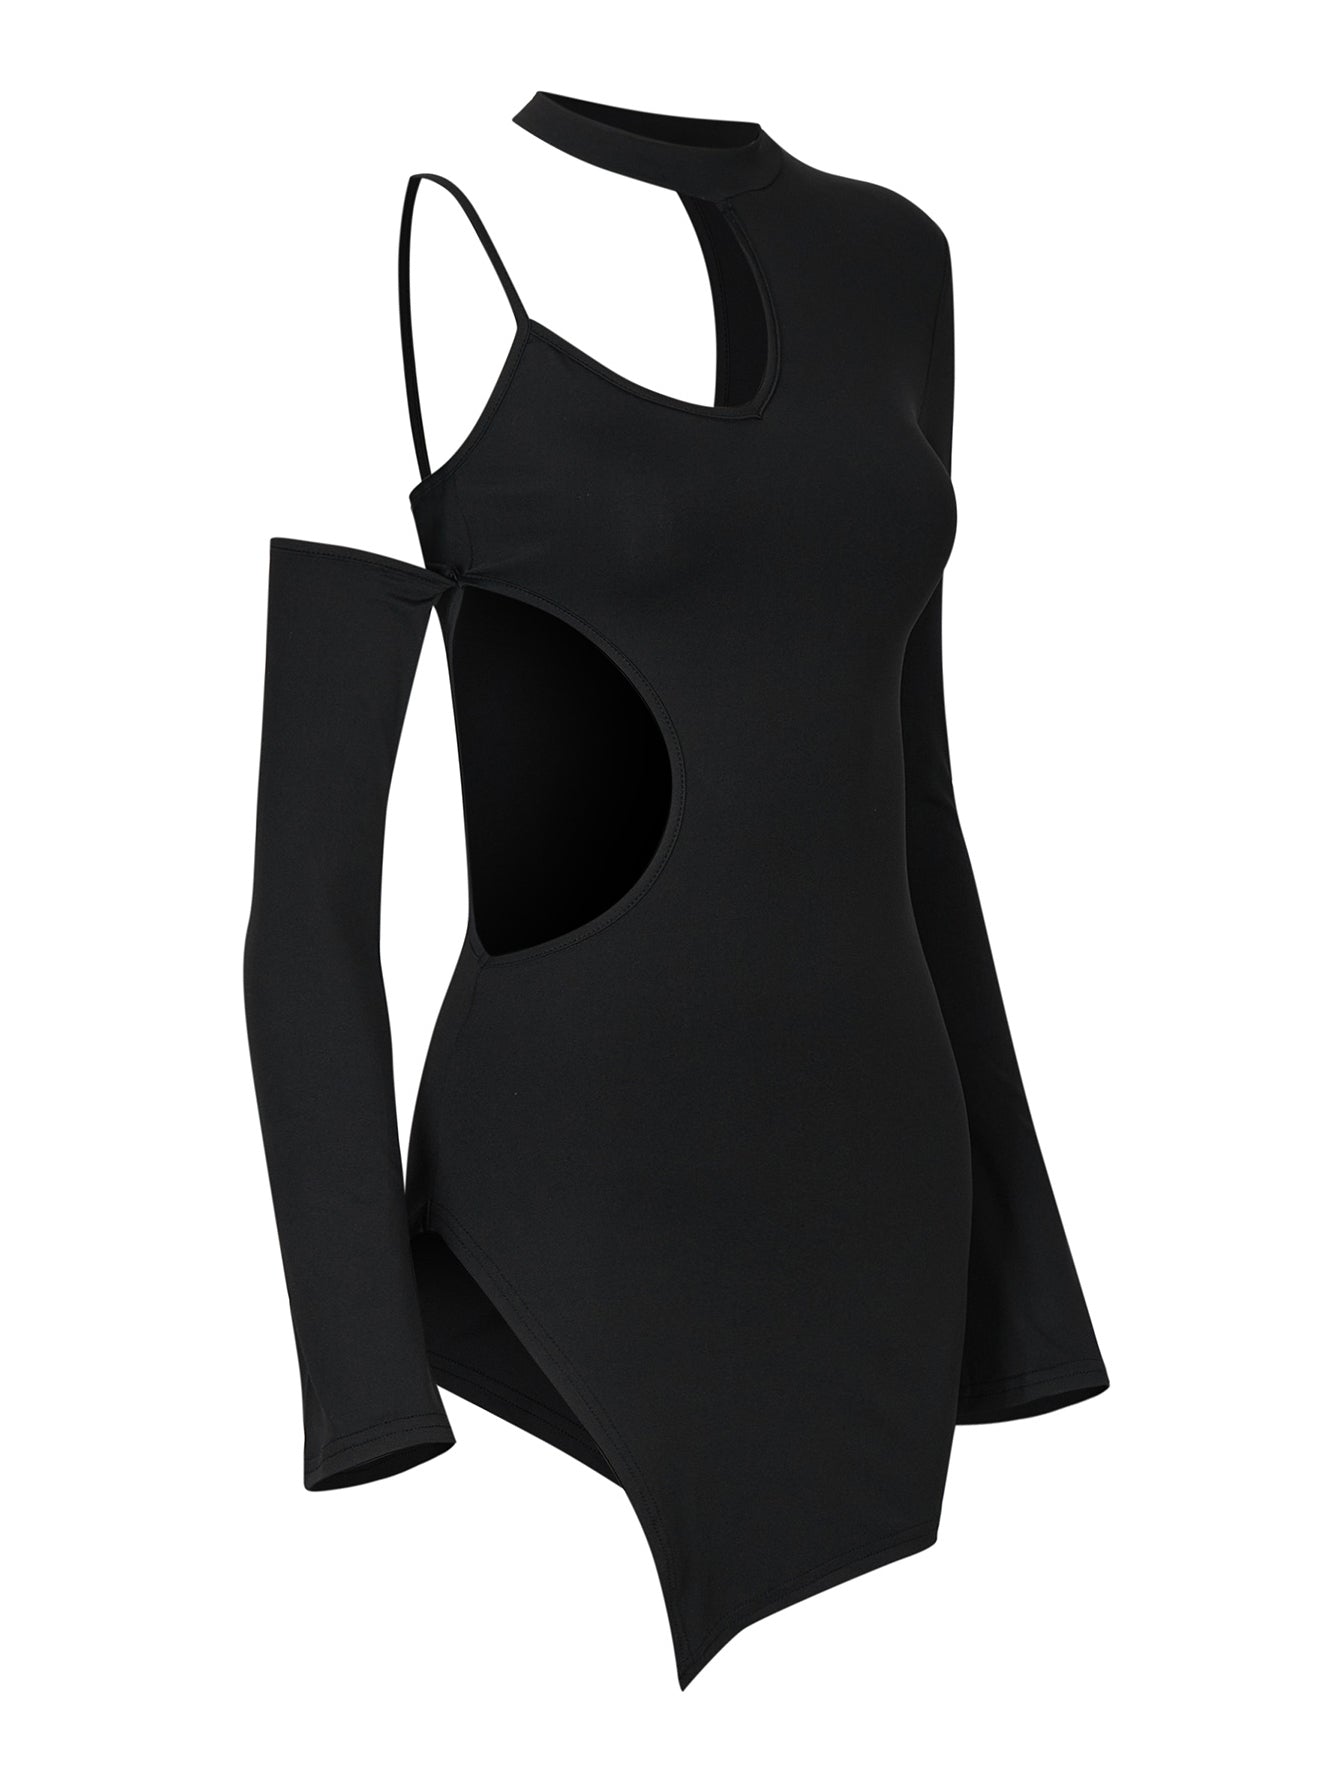 Women's Asymmetric Black Long Sleeve Dress